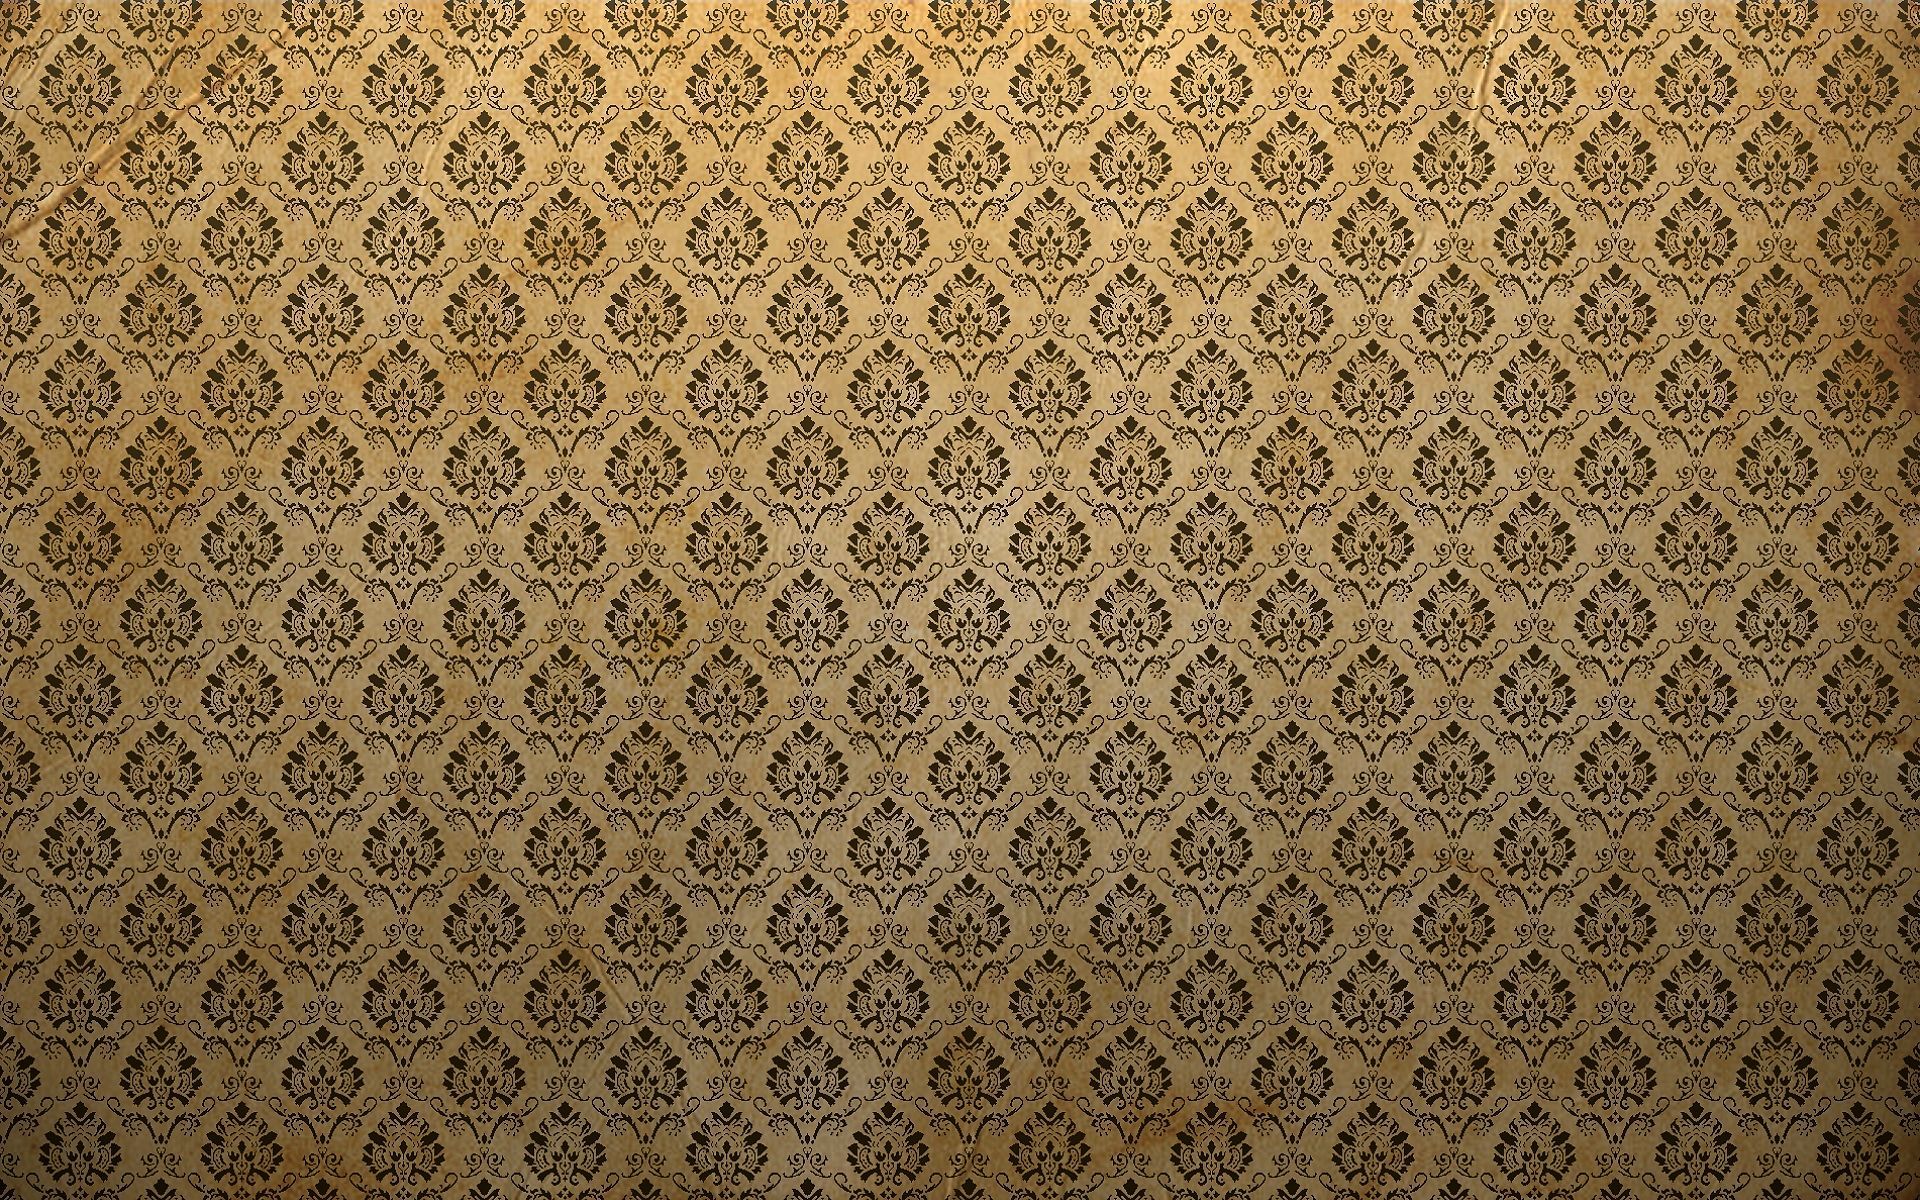 Naomi Watts Wallpapers DesktopGoodies.com Free Backgrounds